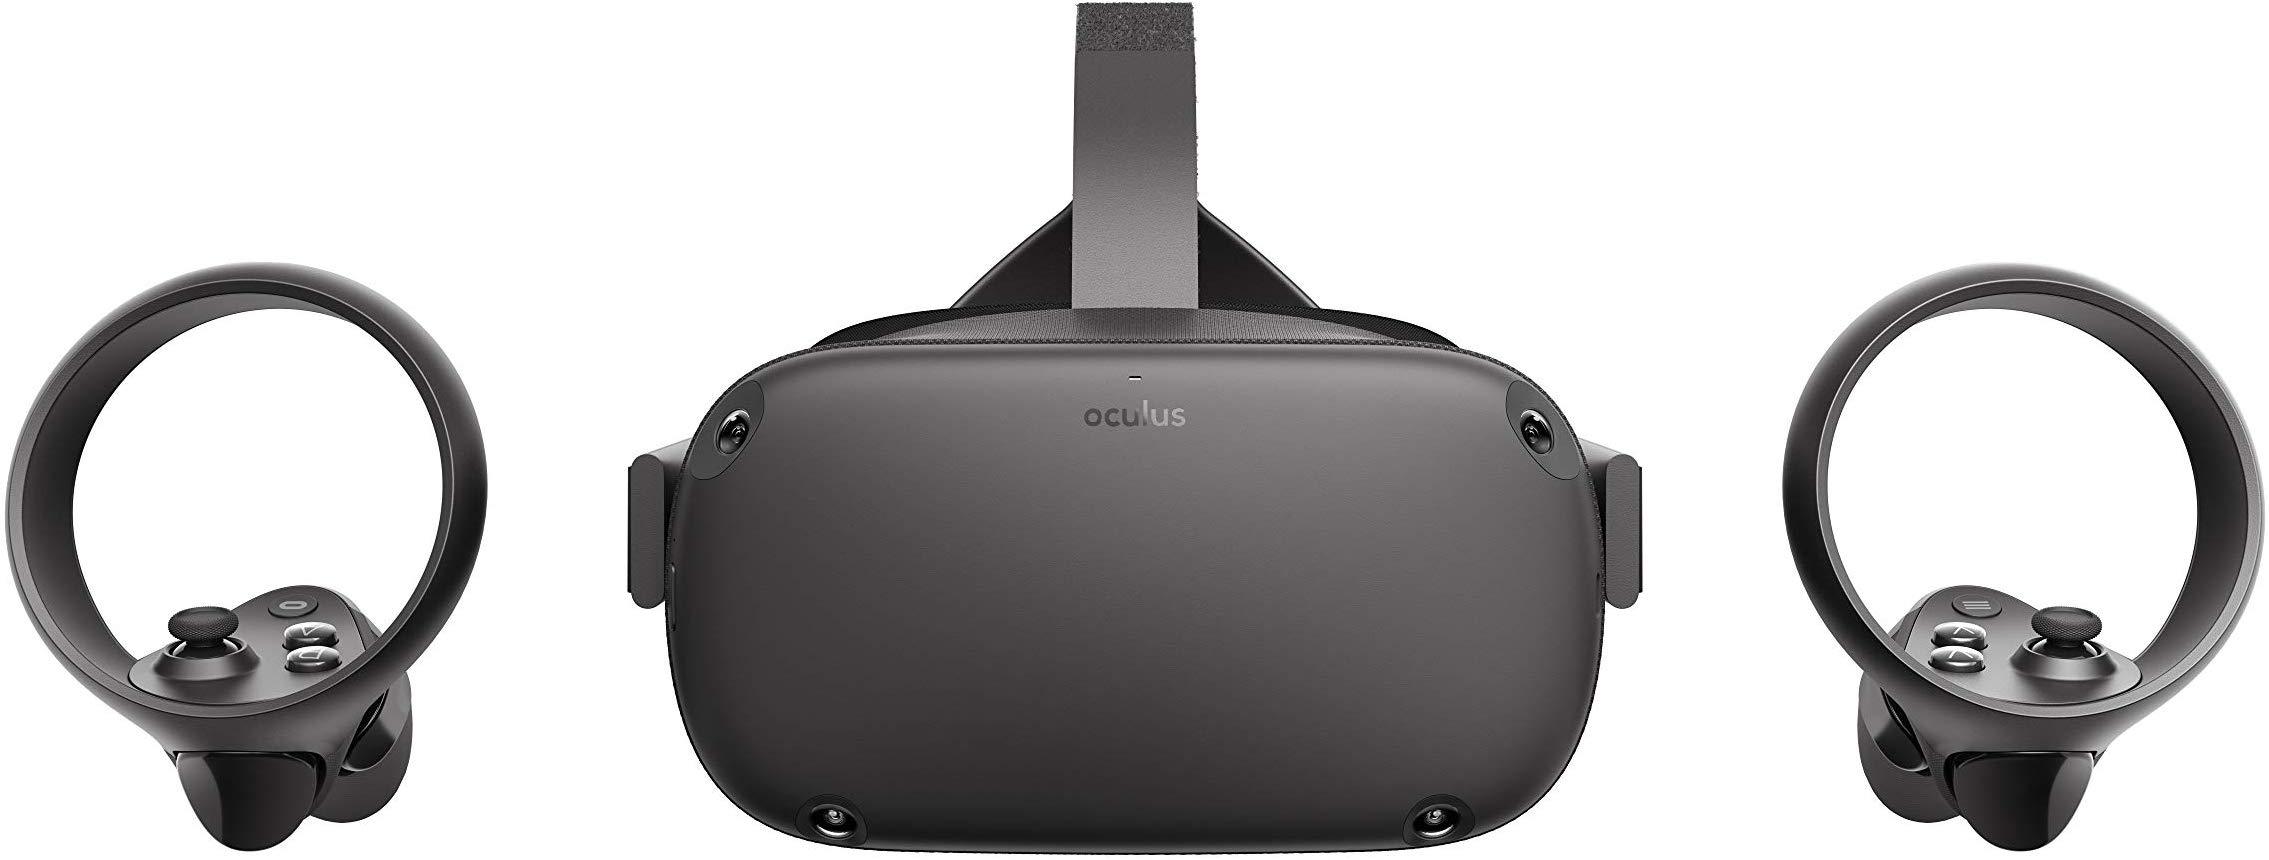 oculus quest 128gb vr headset